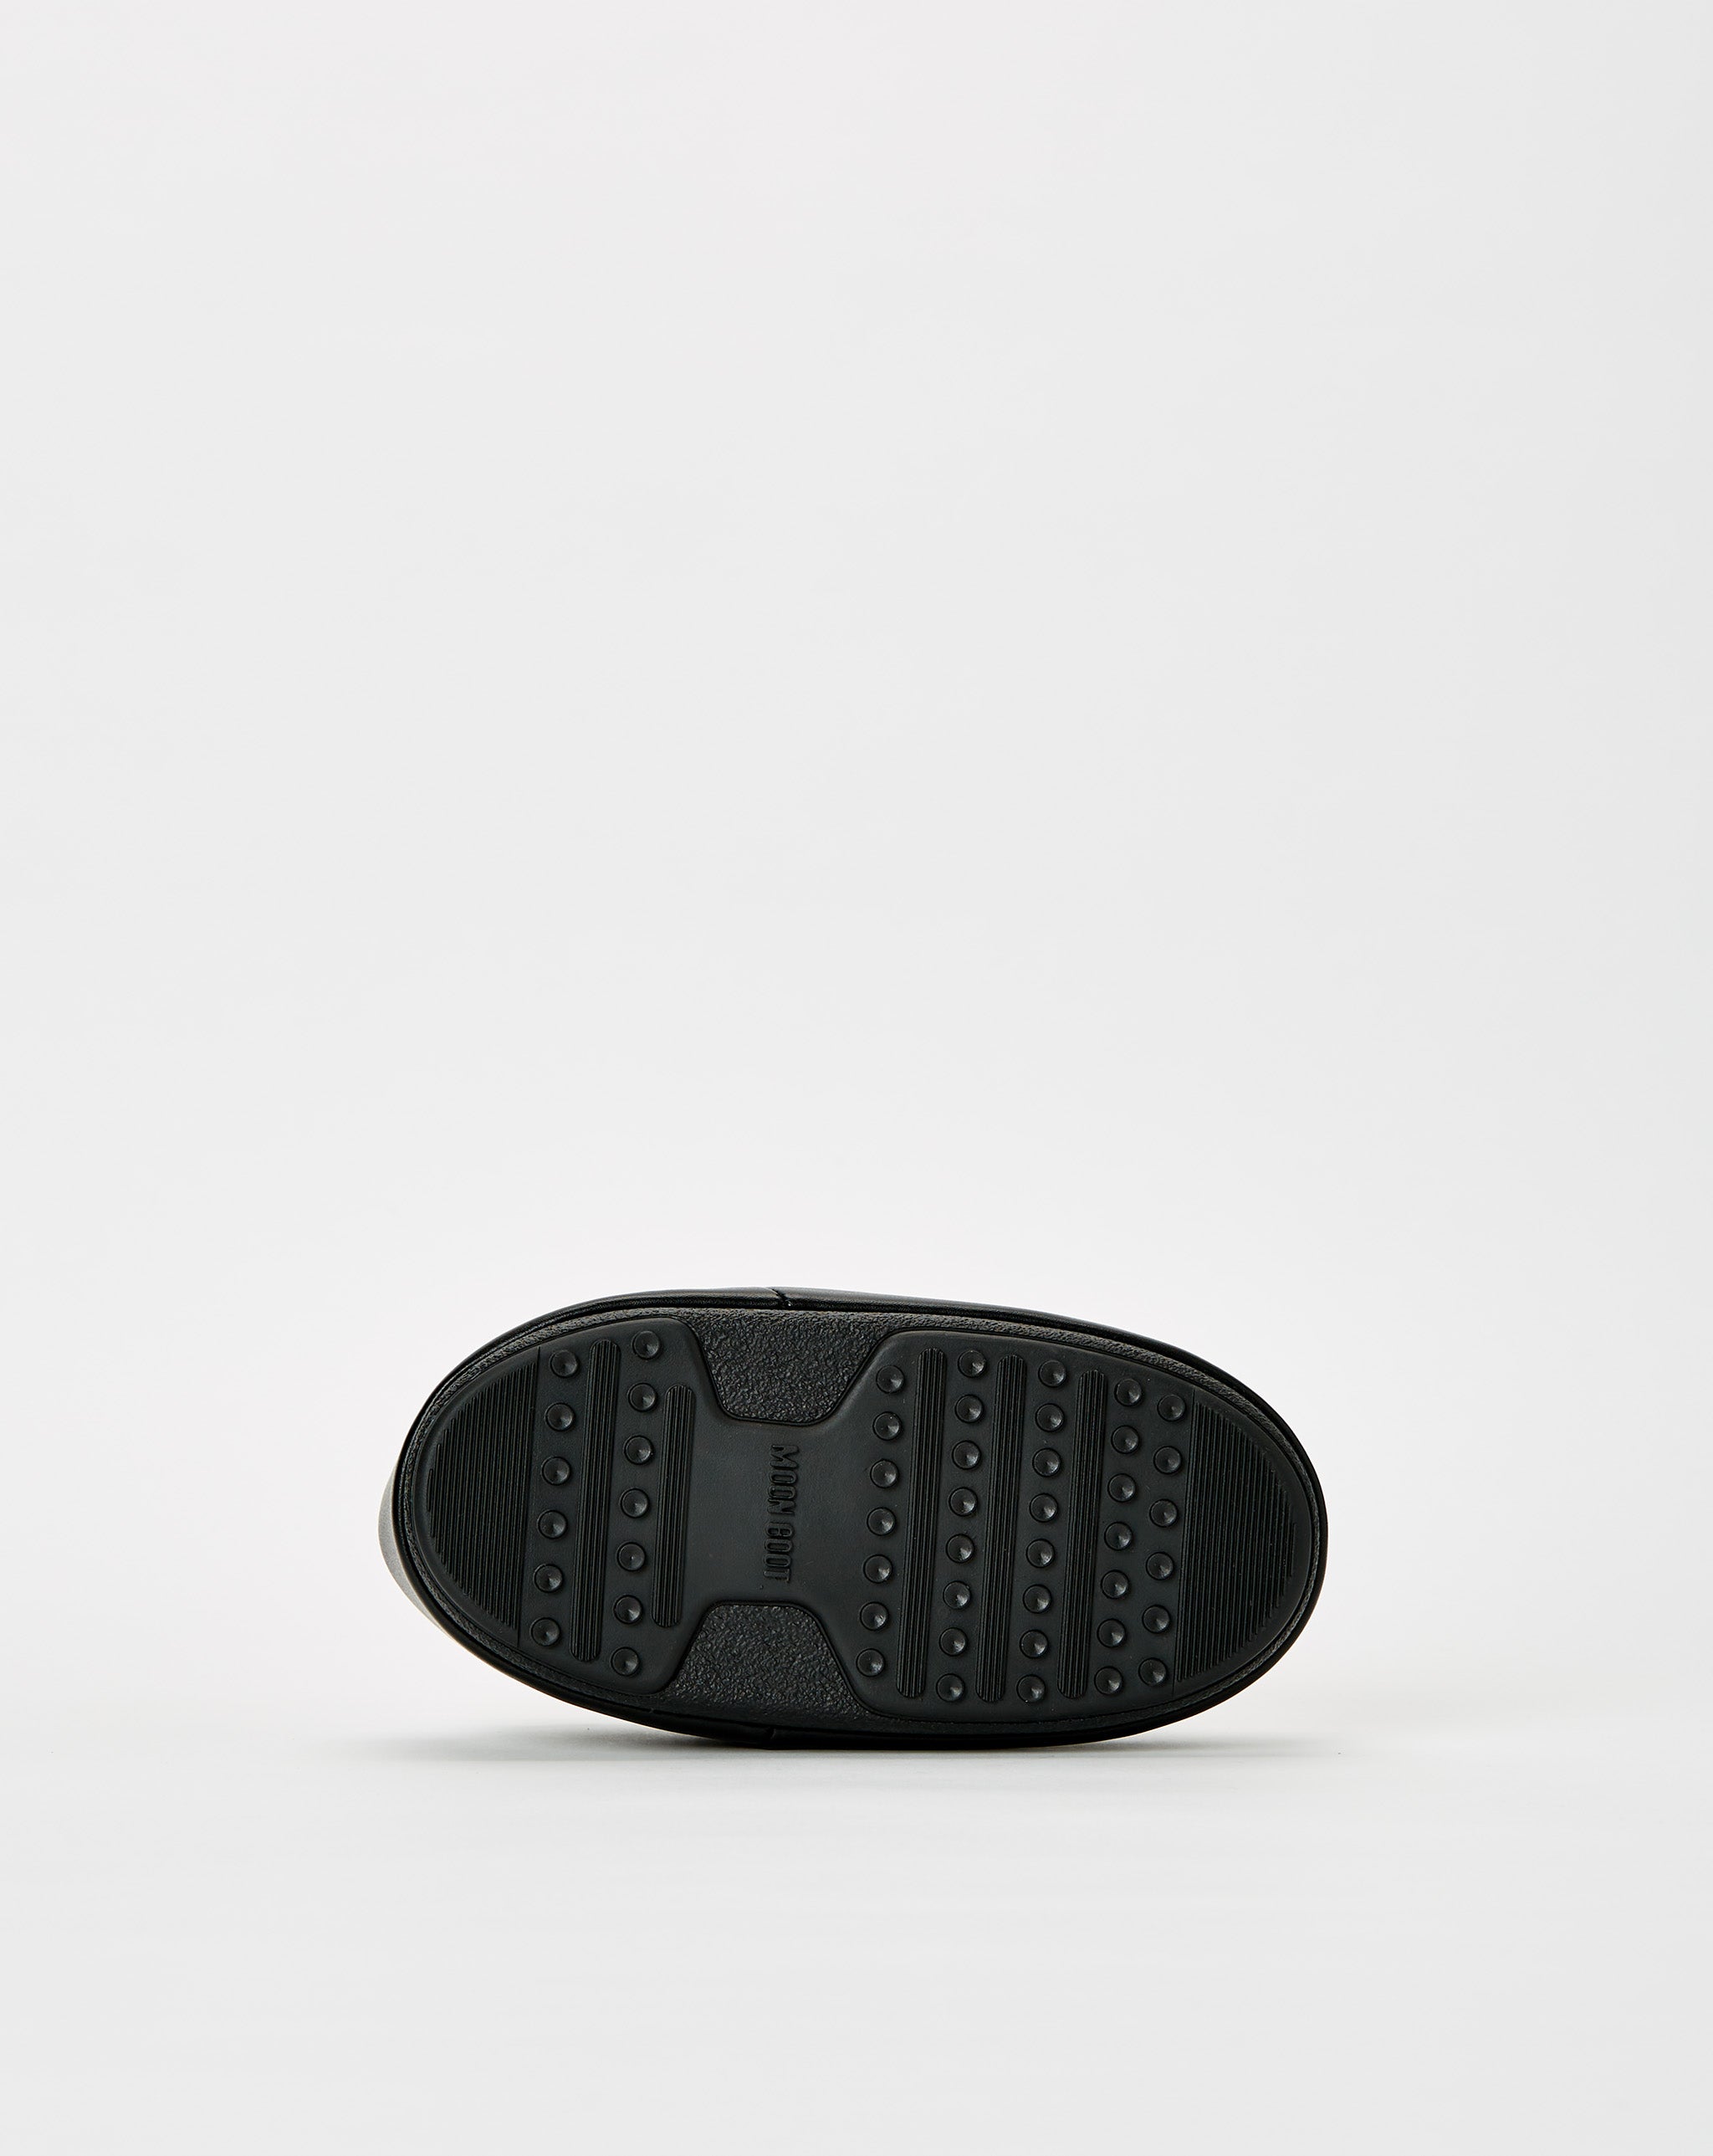 Moon Boot Blue limited edition shoes Jordan  - Cheap 127-0 Jordan outlet